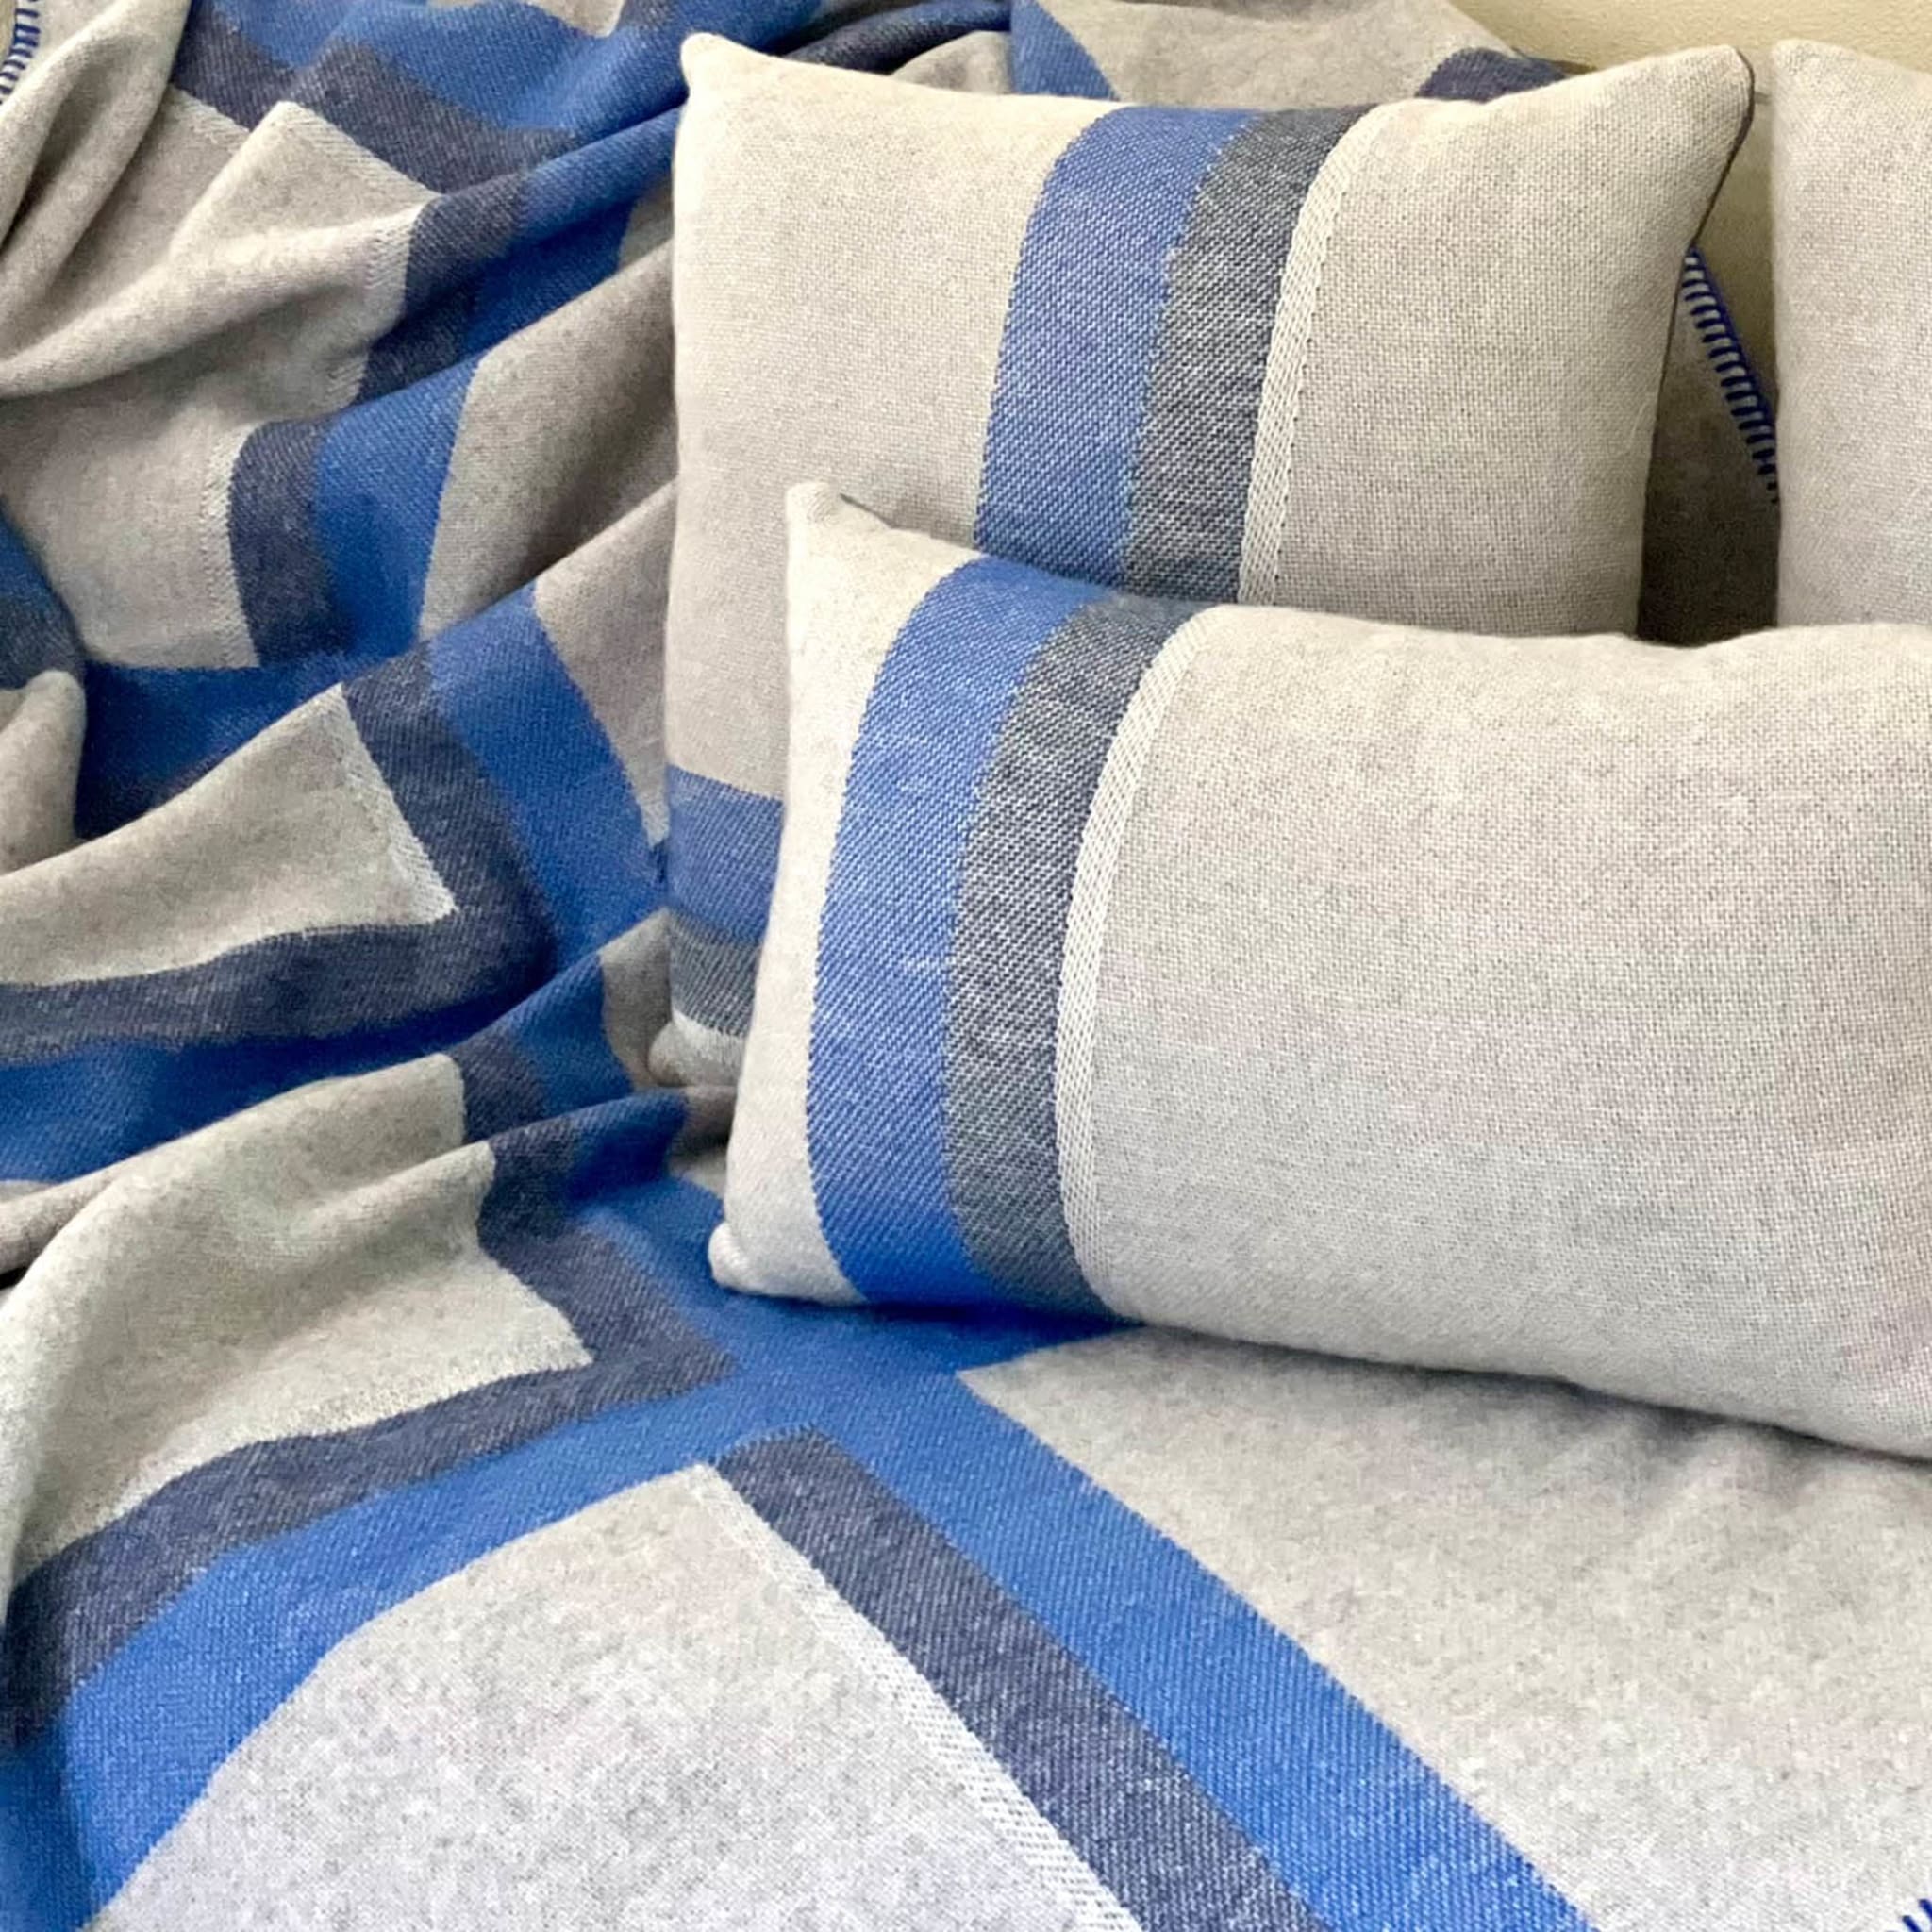 Cornice Blue & Gray Blanket - Alternative view 4